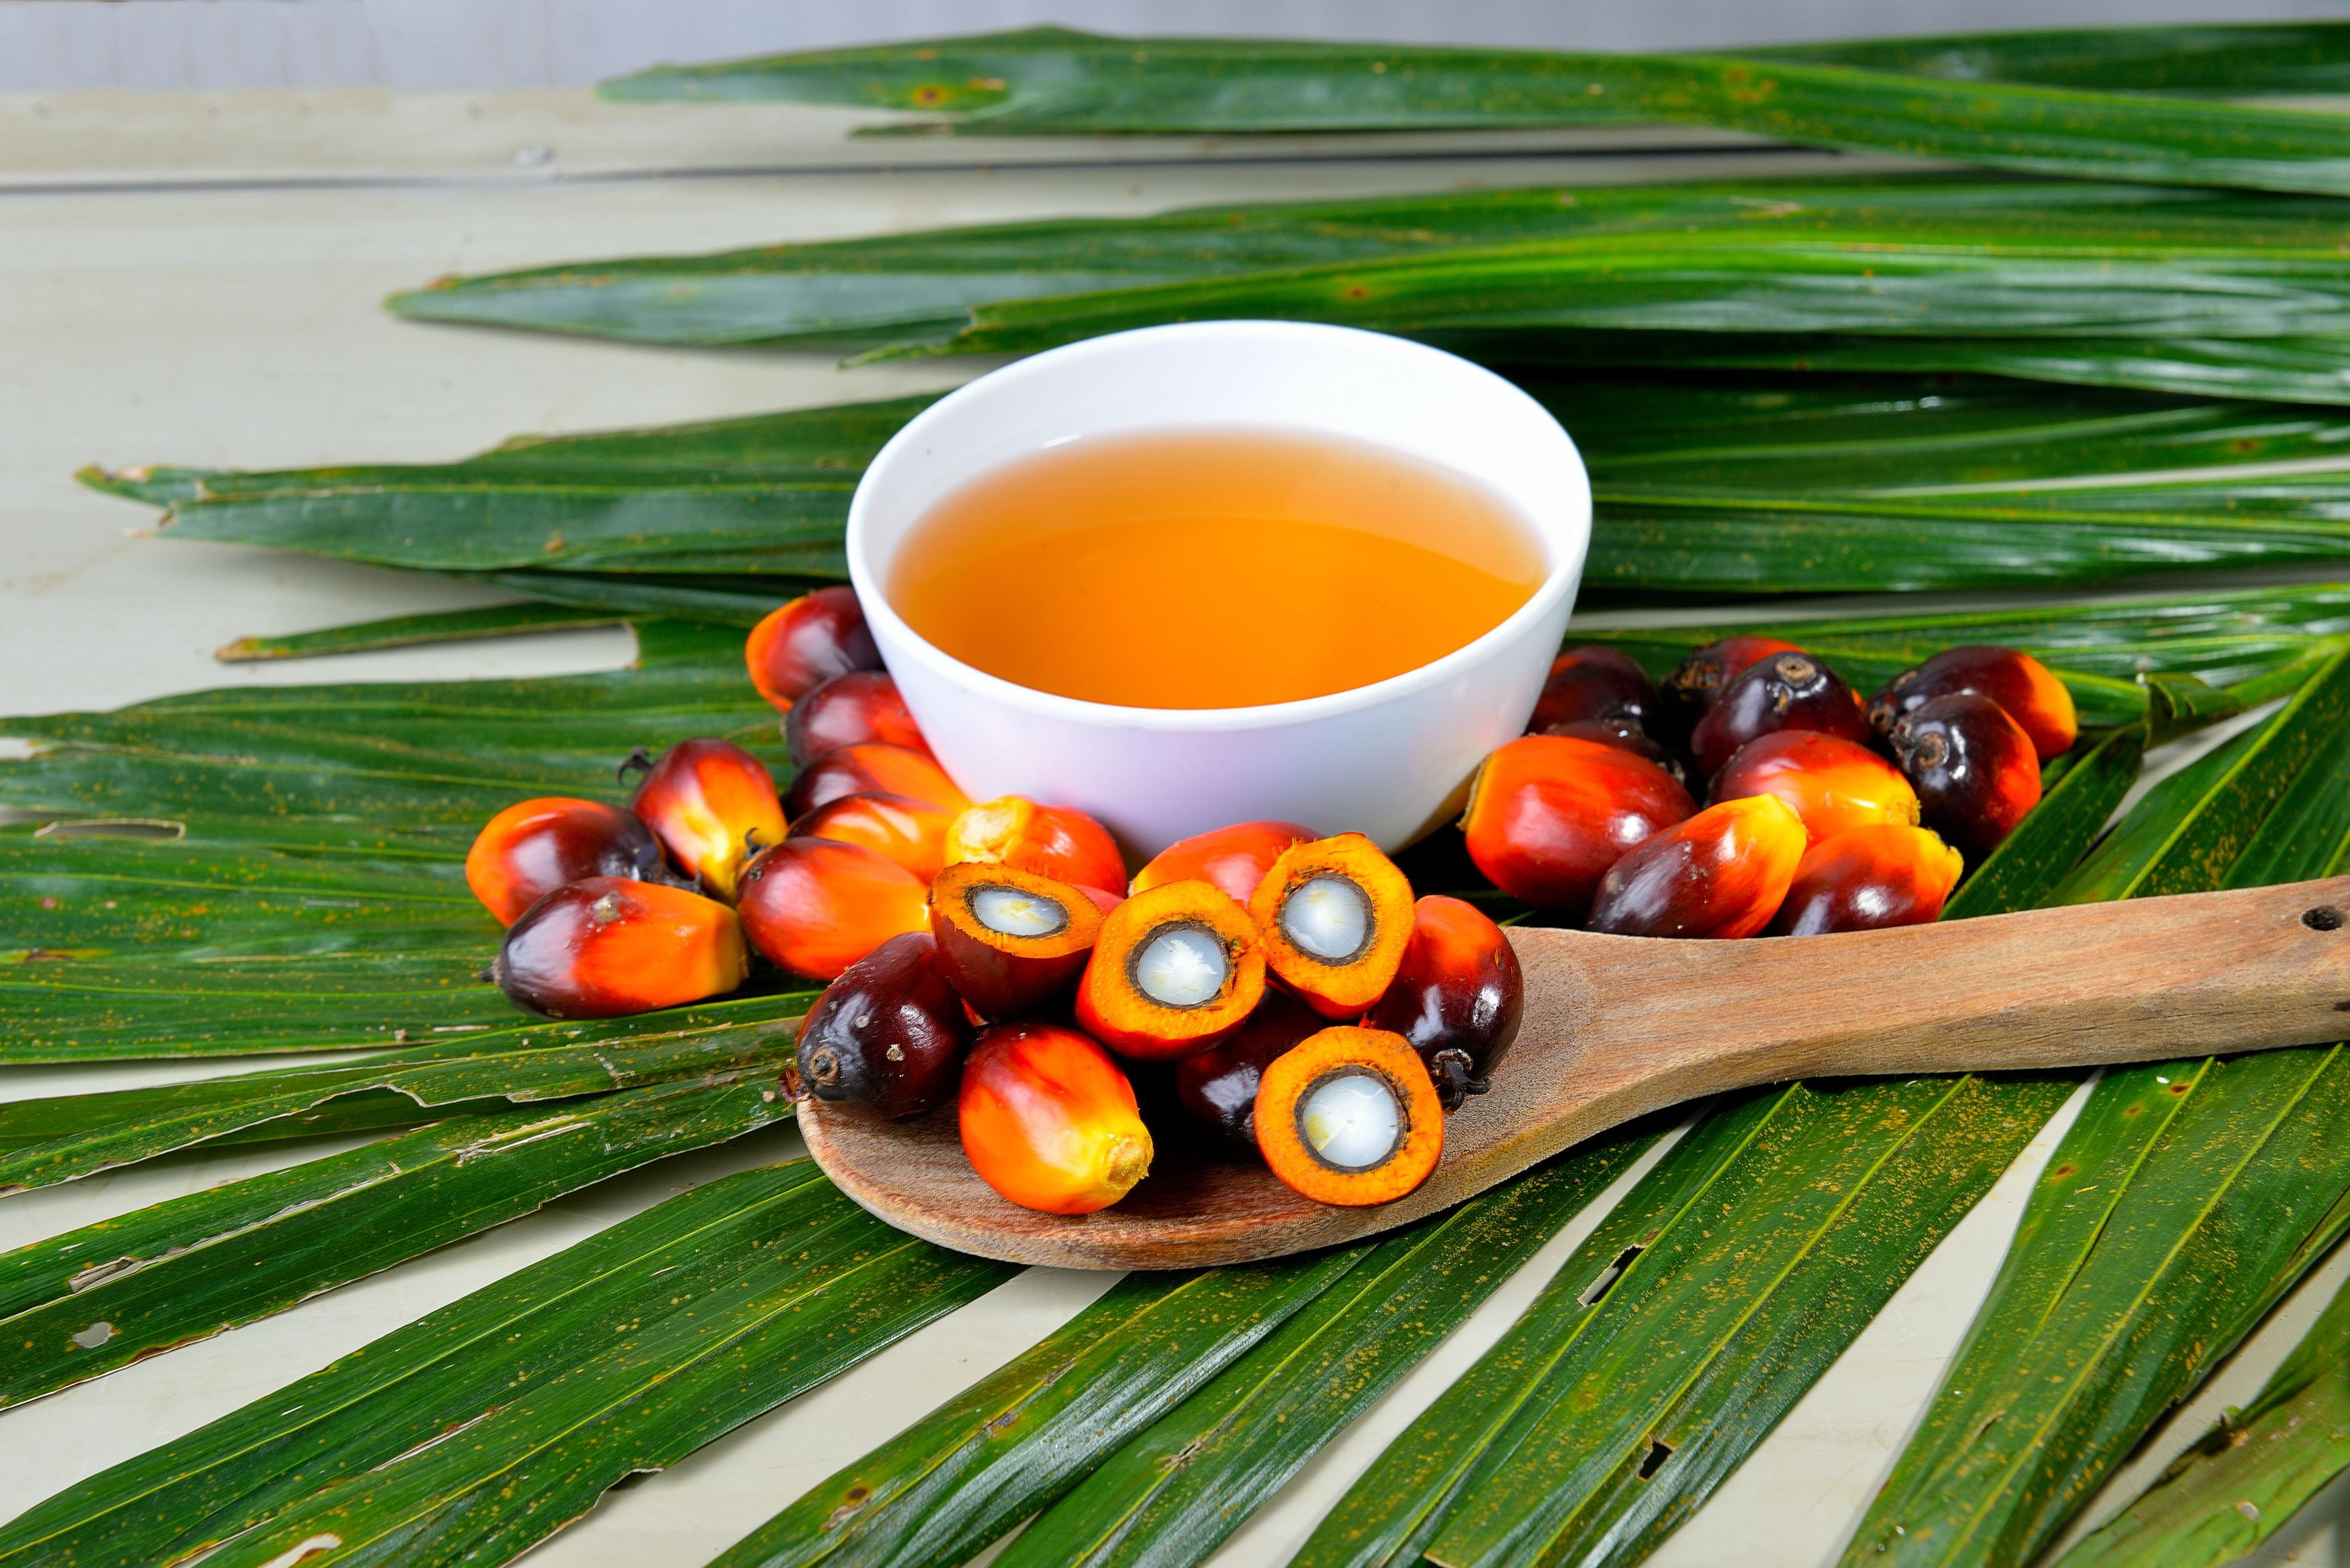 palm oil kernels